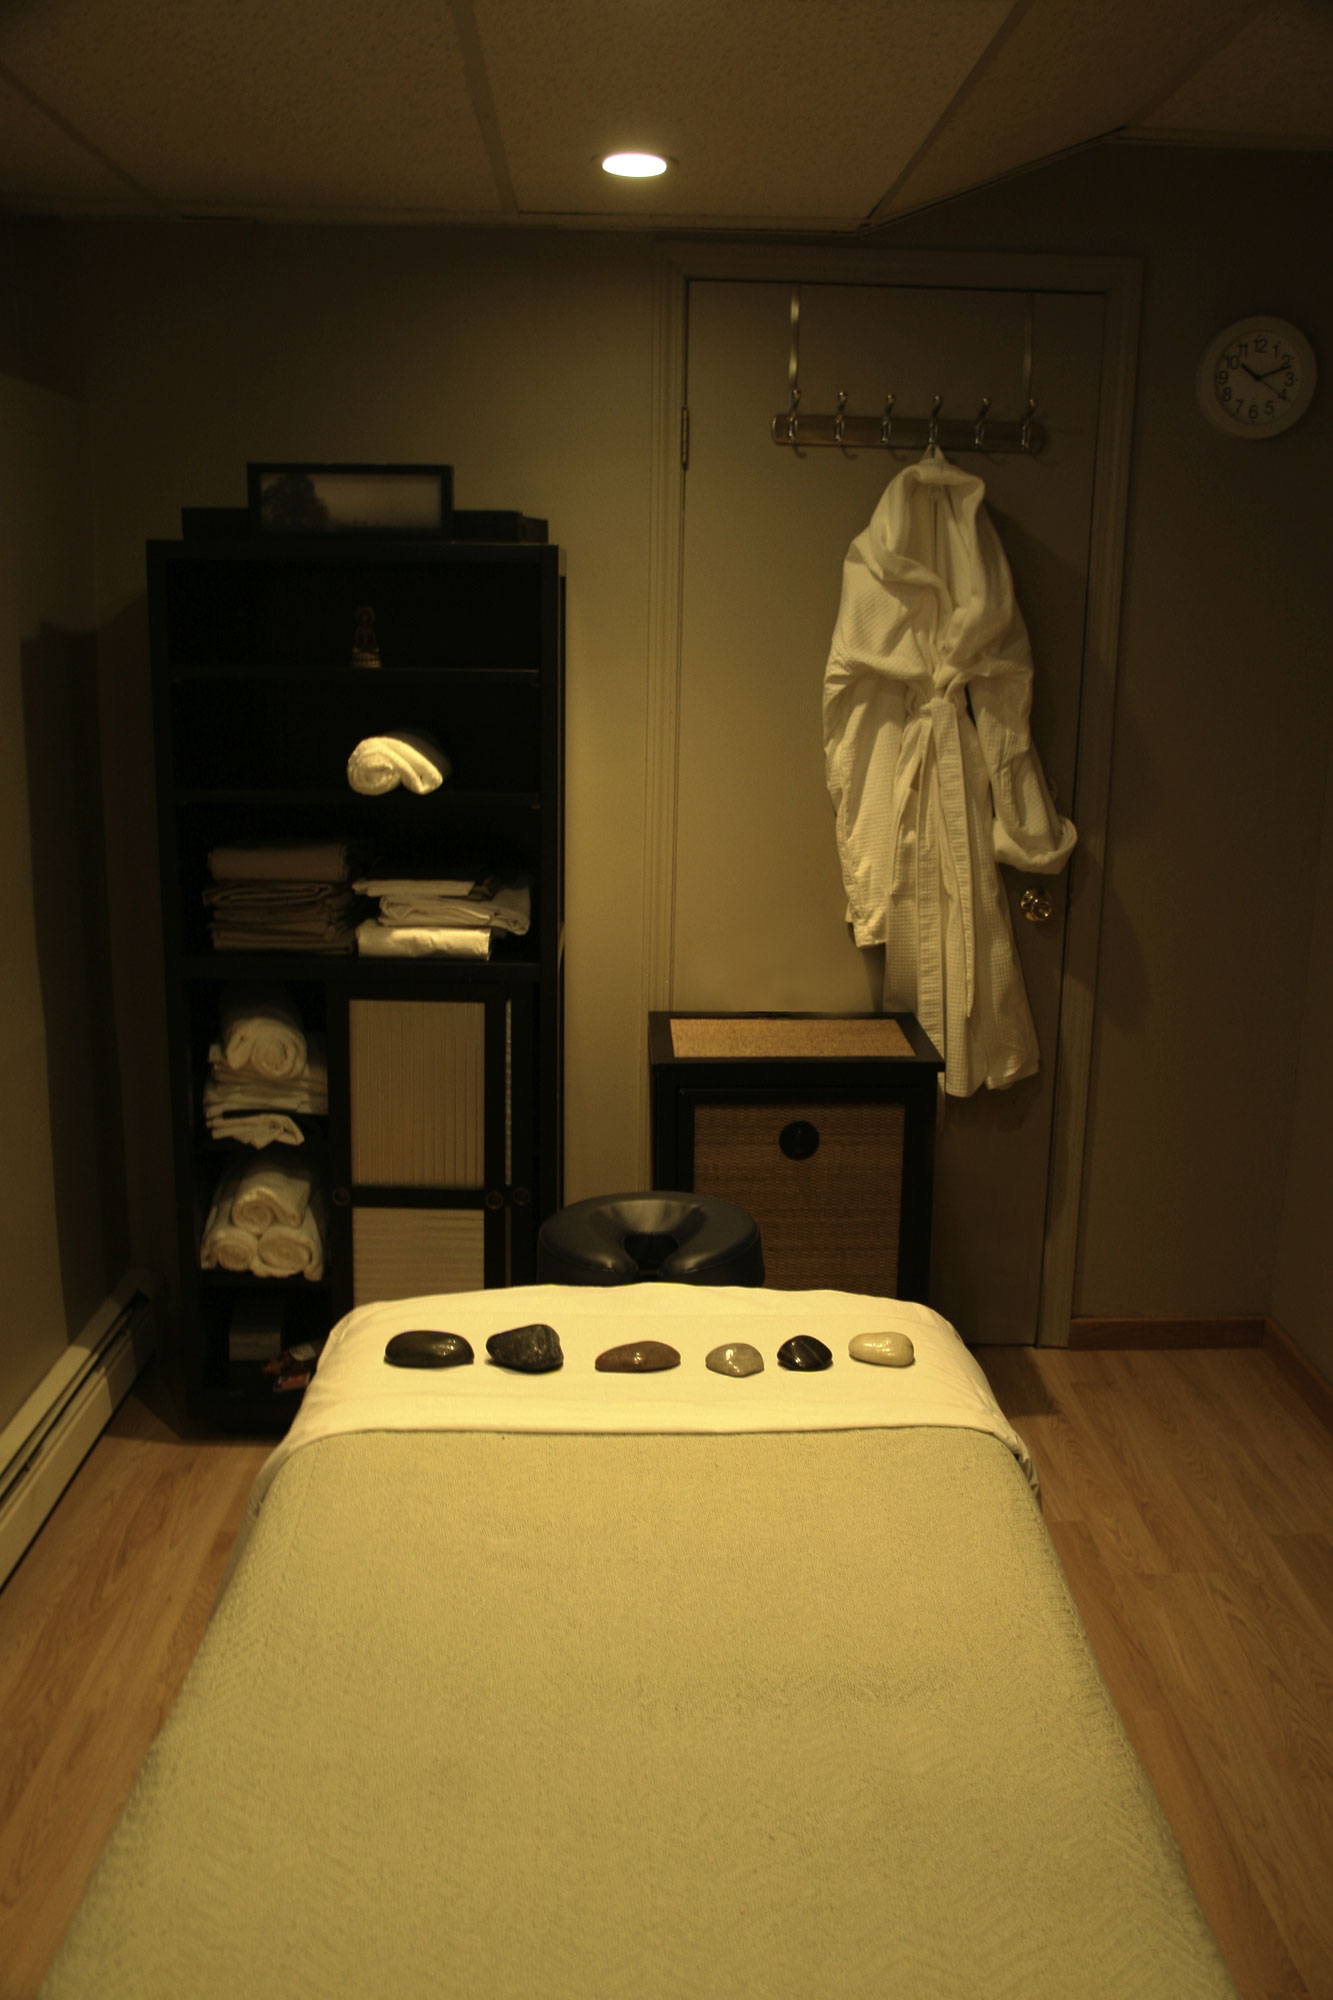 Spa Massage Room Design Ideas Home Based Massage And Spa